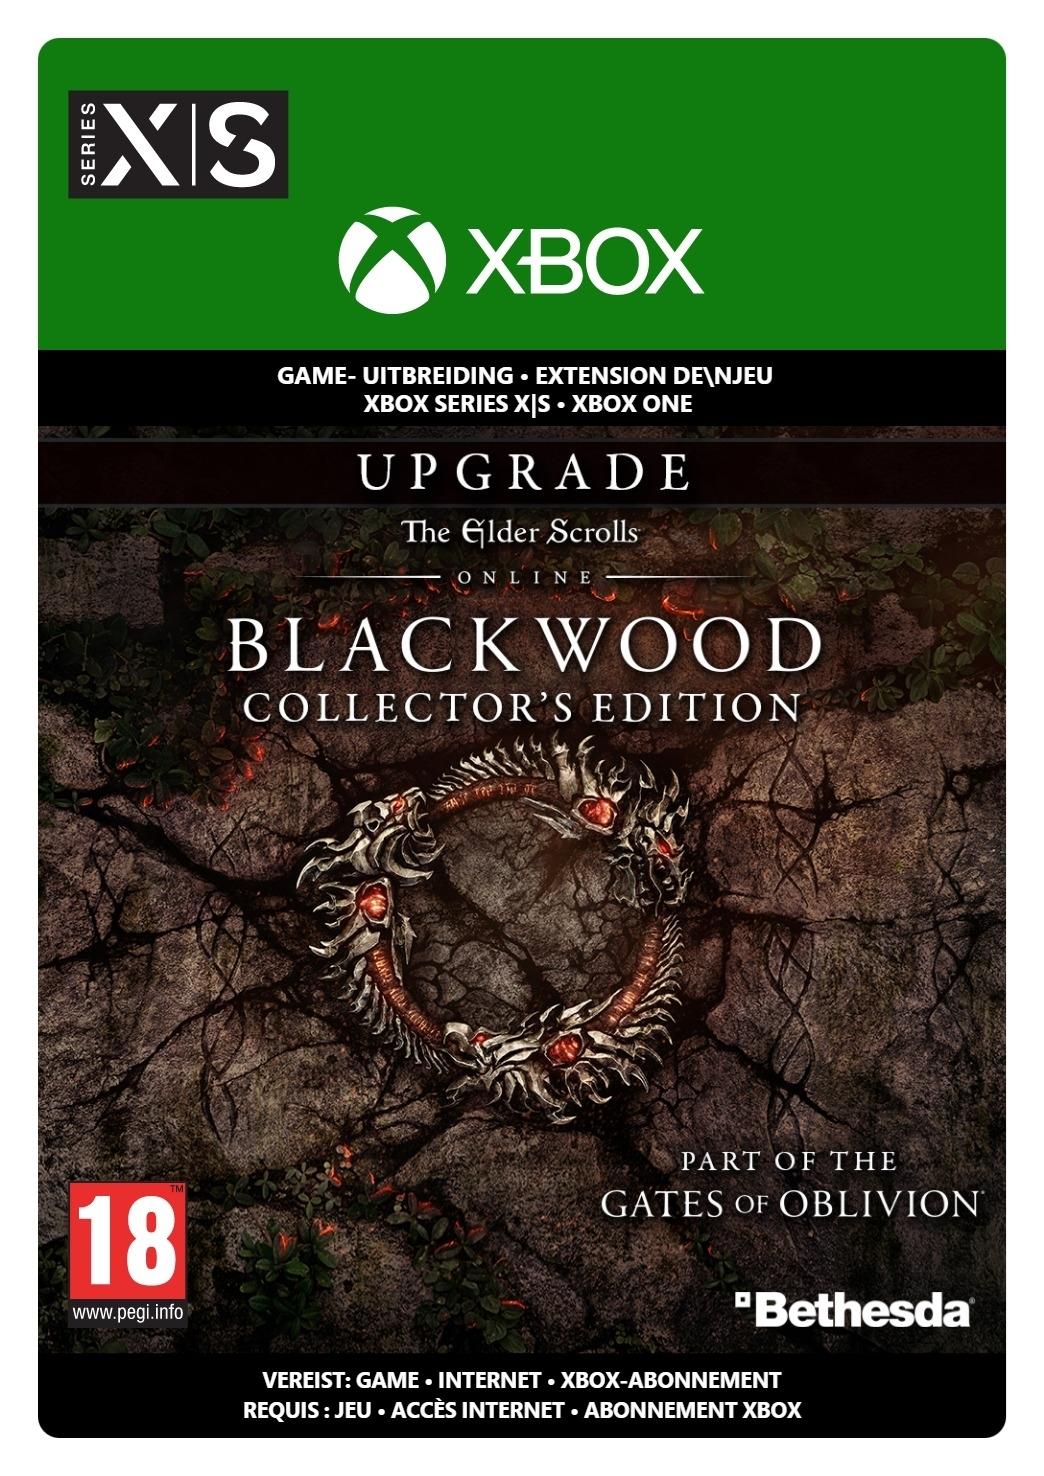 The Elder Scrolls Online: Blackwood Upgrade Collector's Edition - Xbox Series X/Xbox One - Add-o | 7D4-00607 (dc120111-8ec5-b84c-8175-5e4478a26d92)